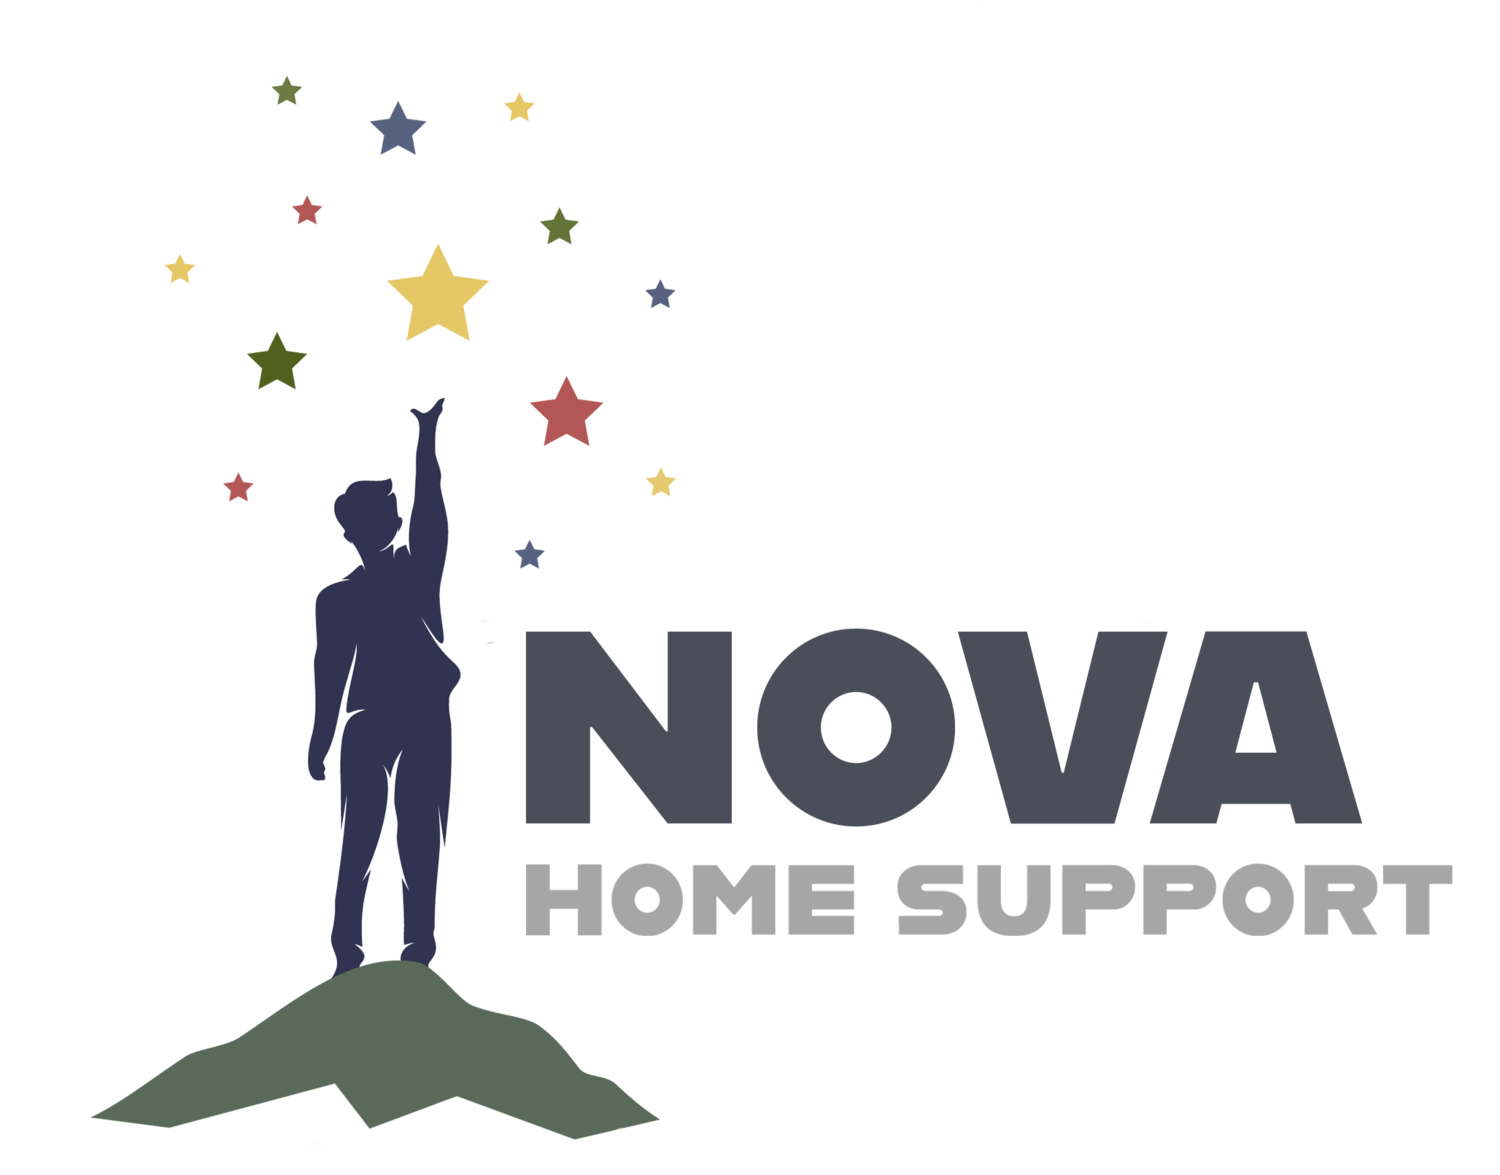 Nova Home Support - Residential Care Program